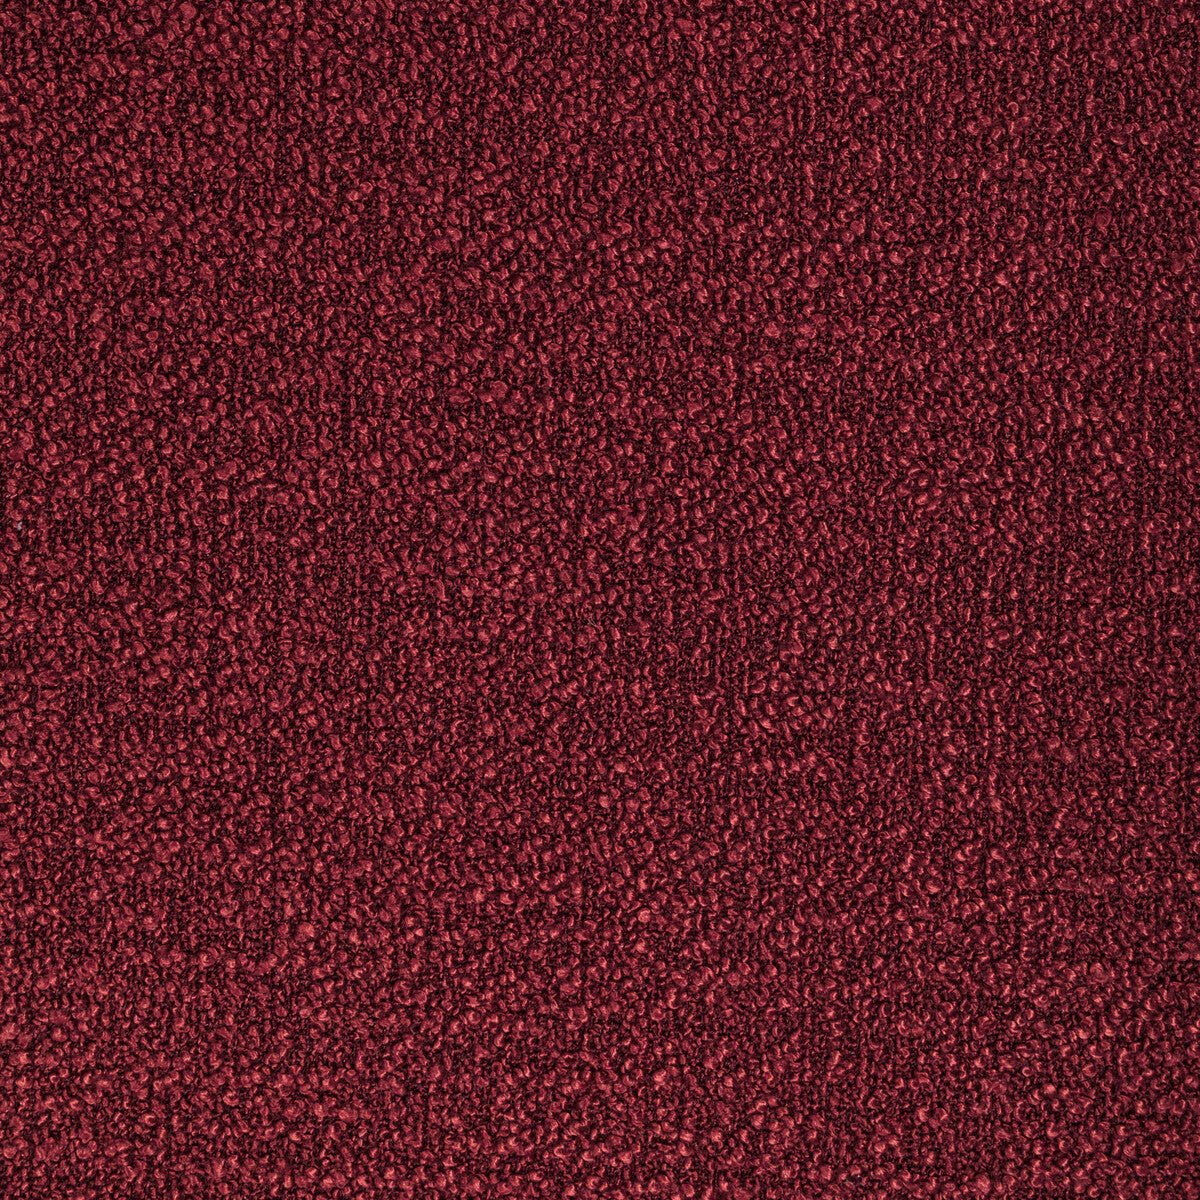 Kravet Smart fabric in 36857-624 color - pattern 36857.624.0 - by Kravet Smart in the Performance Kravetarmor collection